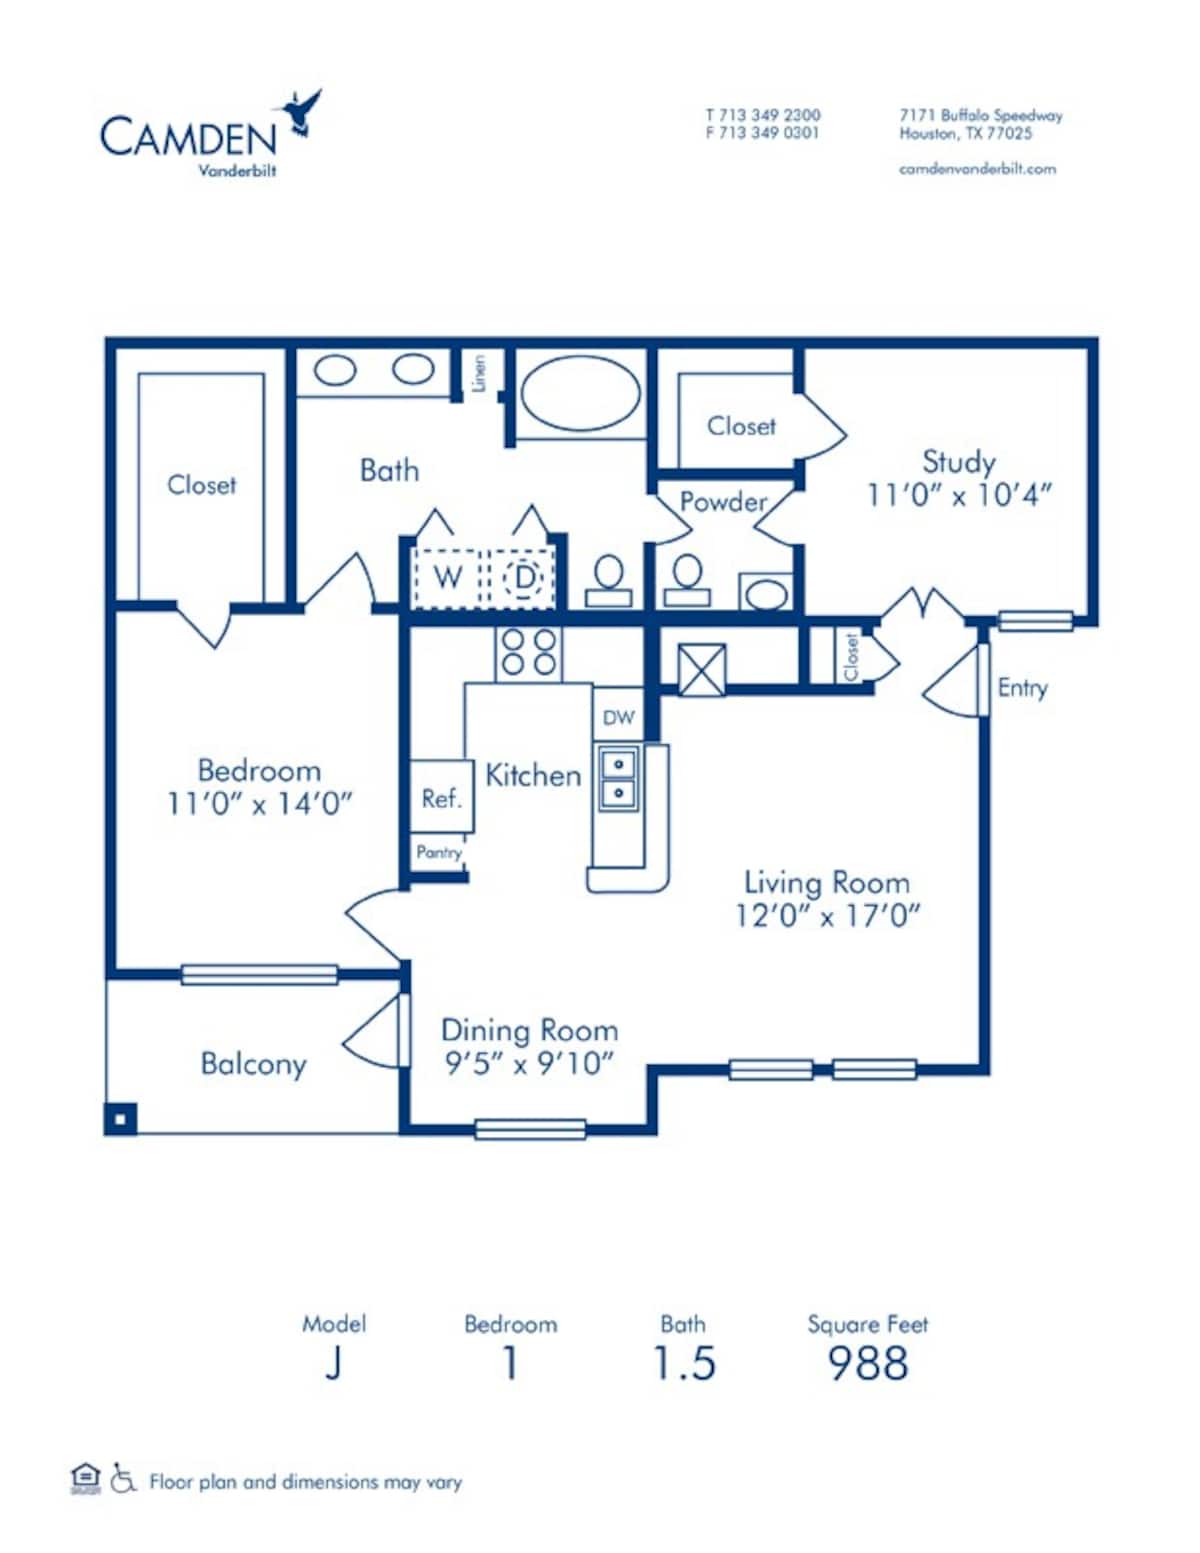 Floorplan diagram for J, showing 1 bedroom